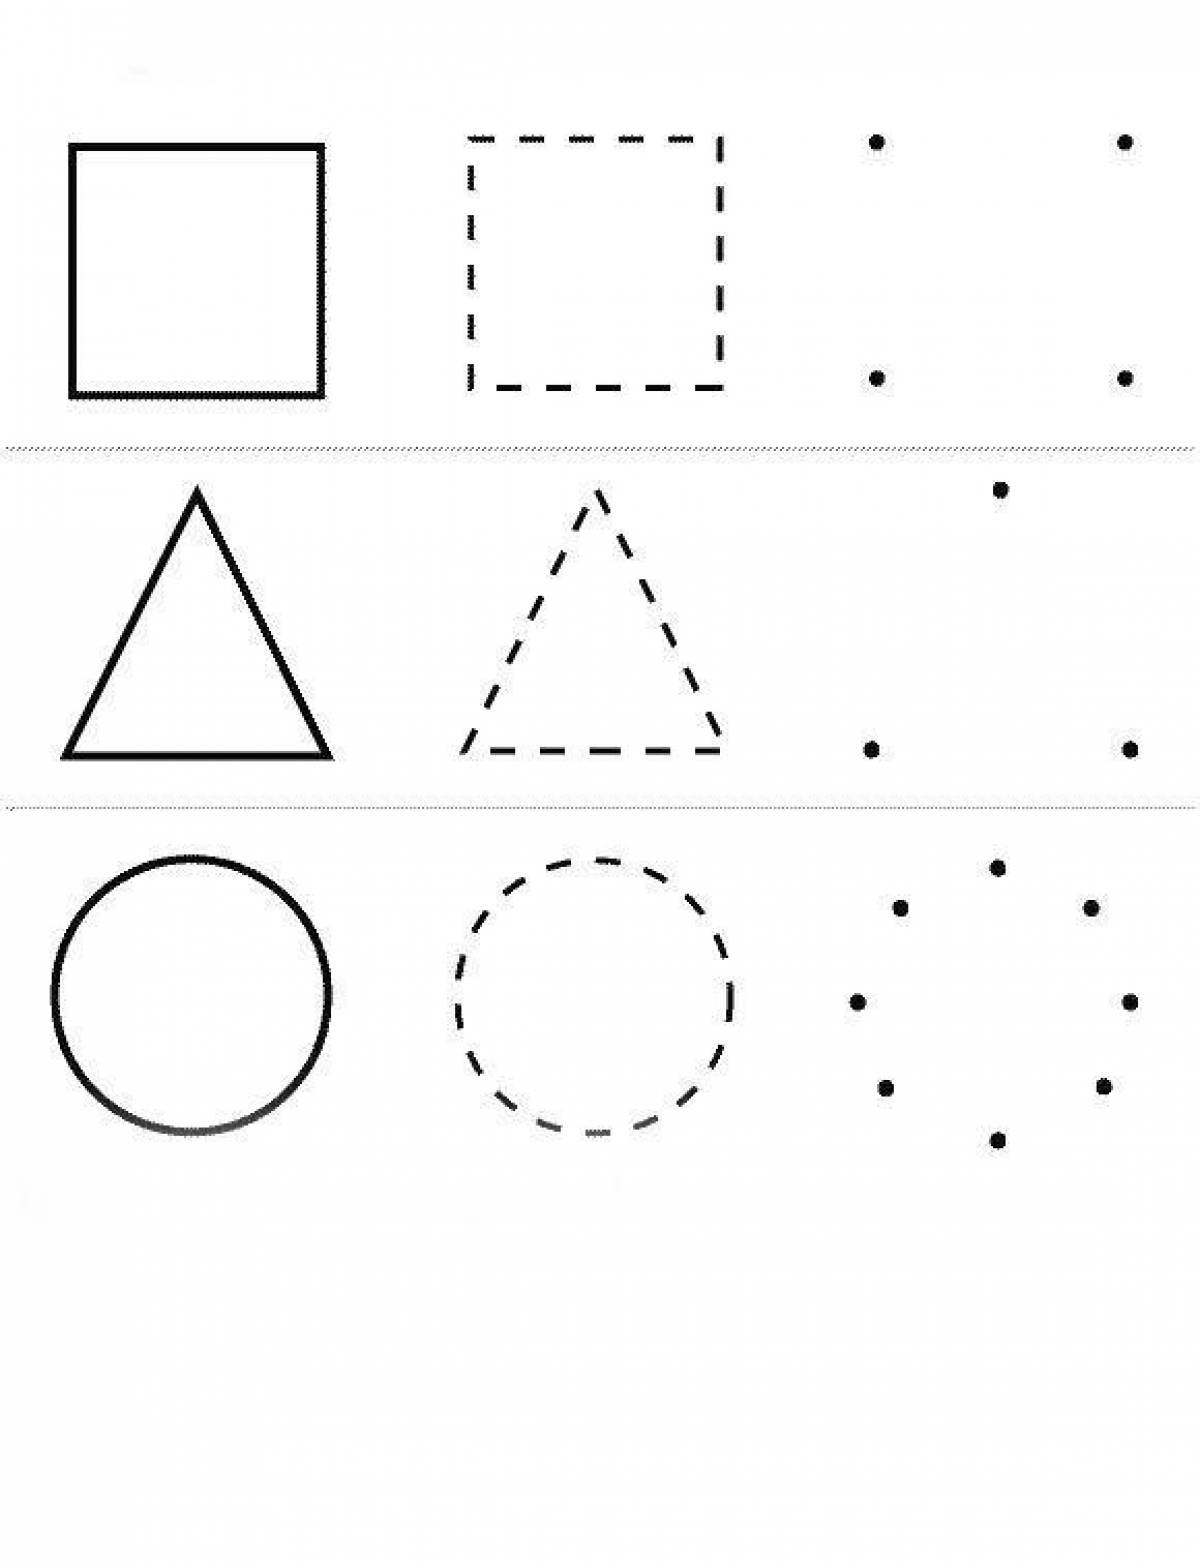 Figure geometric shapes